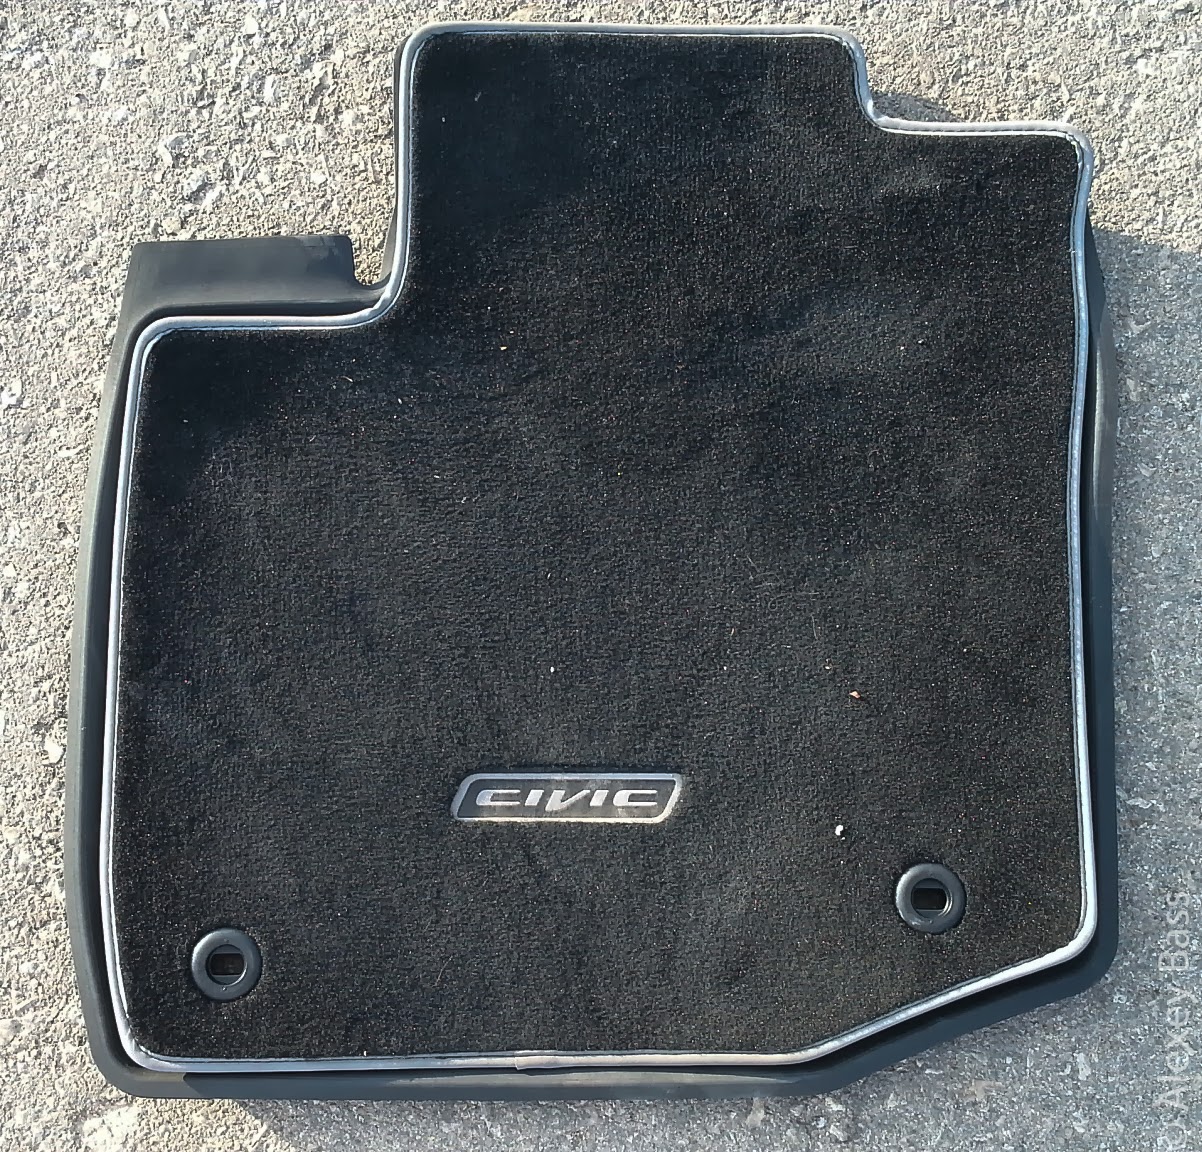 New Honda Civic Hatchback Mk9 2013: Rubber mats